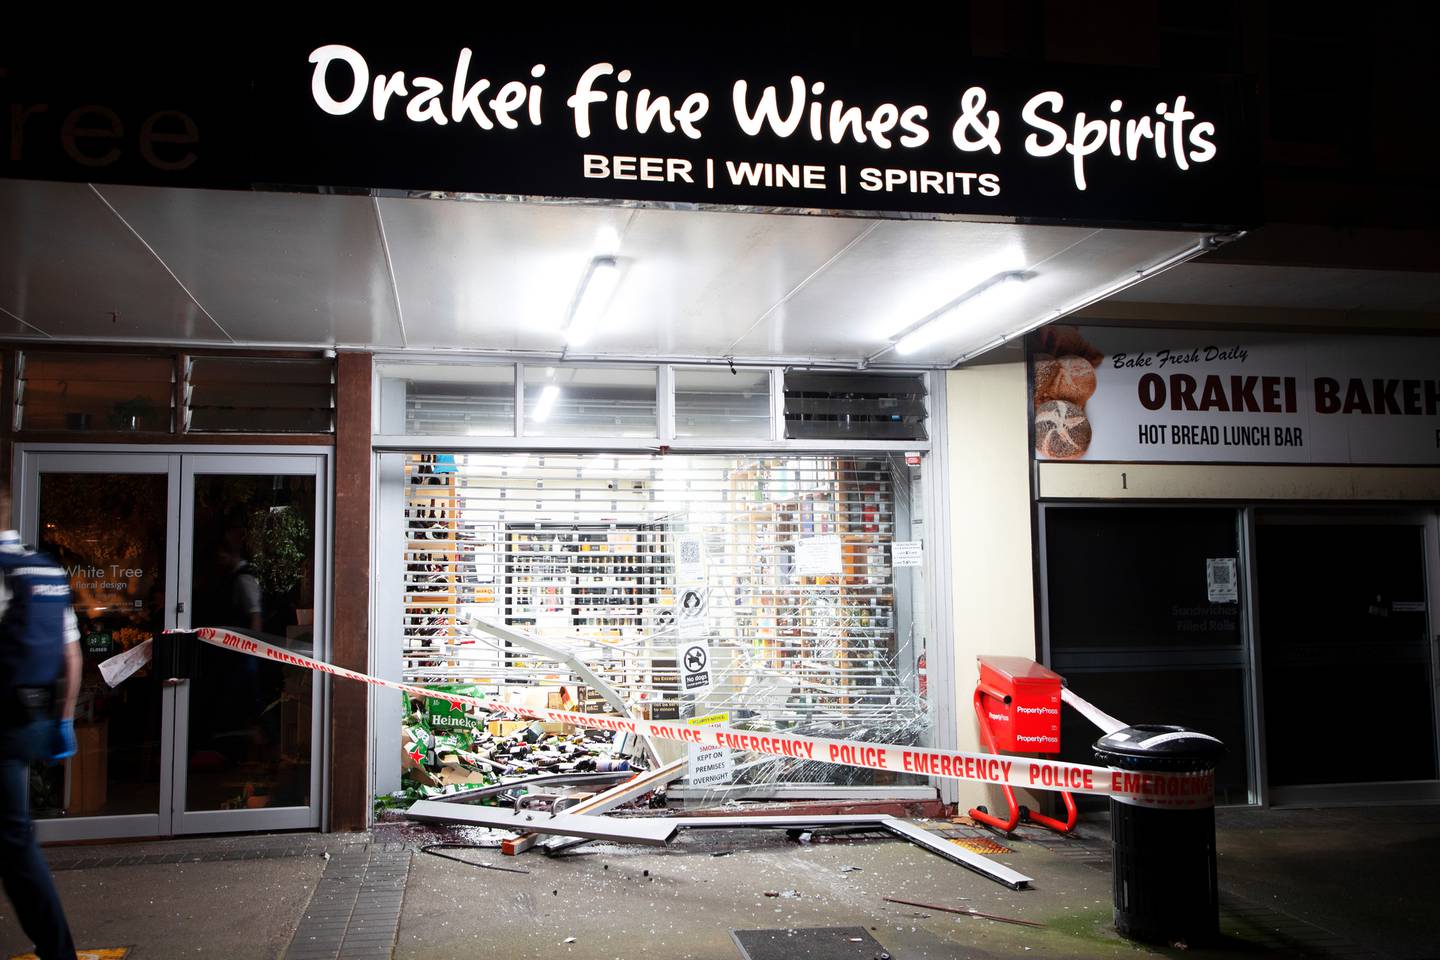 Ōrākei Fine Wines & Spirits 酒类商店一夜之间成为袭击盗贼的目标。 照片/海登伍德沃德